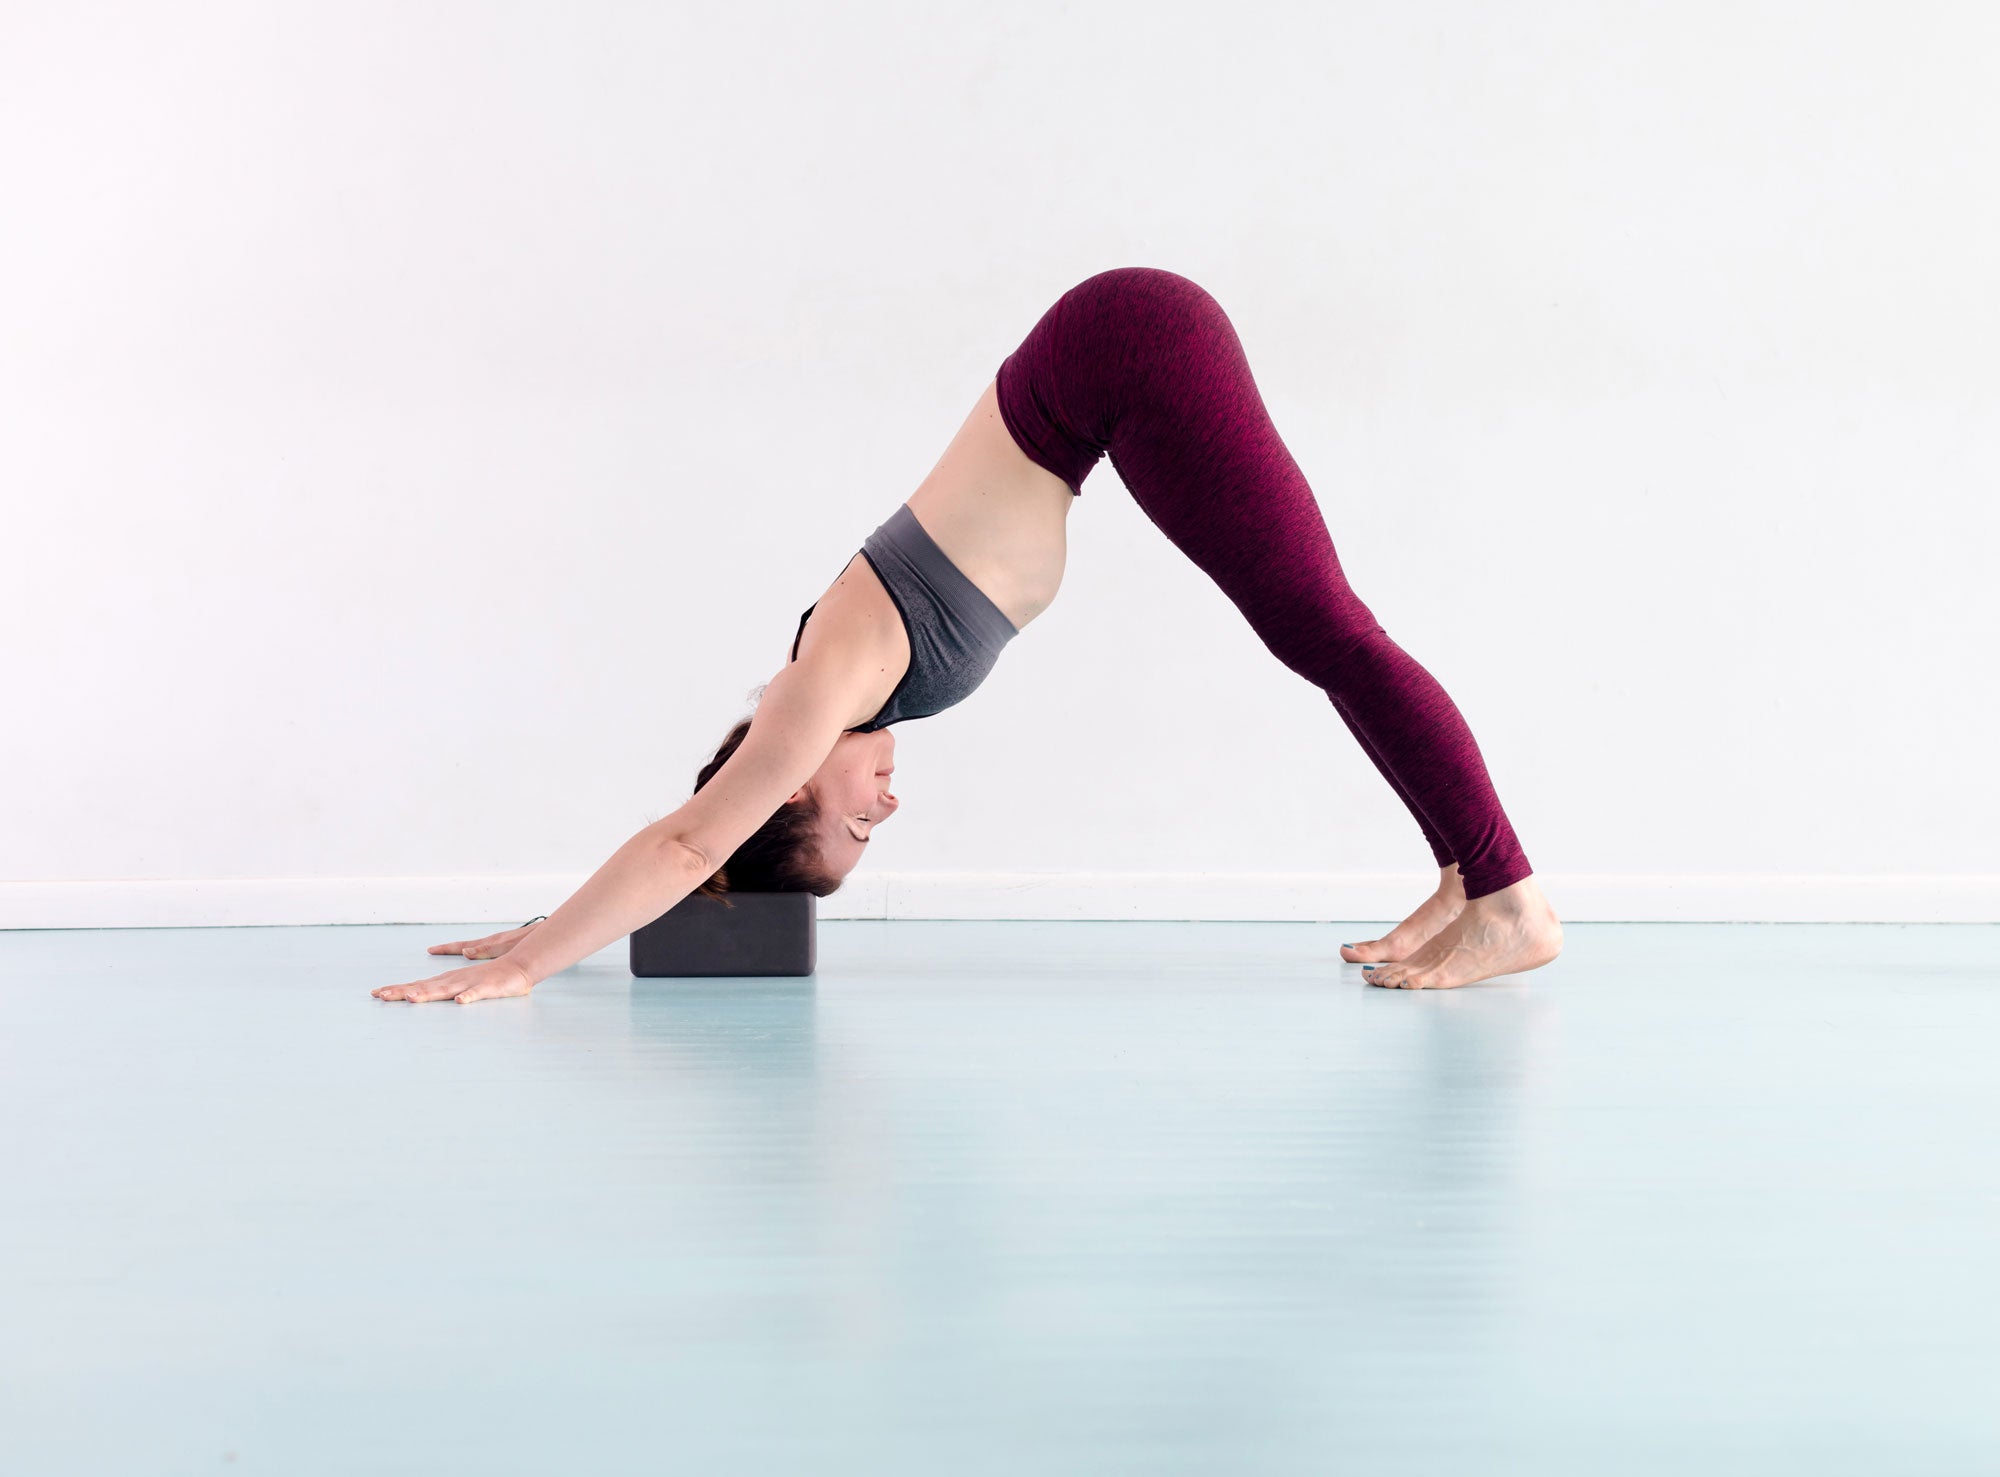 Yoga poses for runners - FitPro Blog